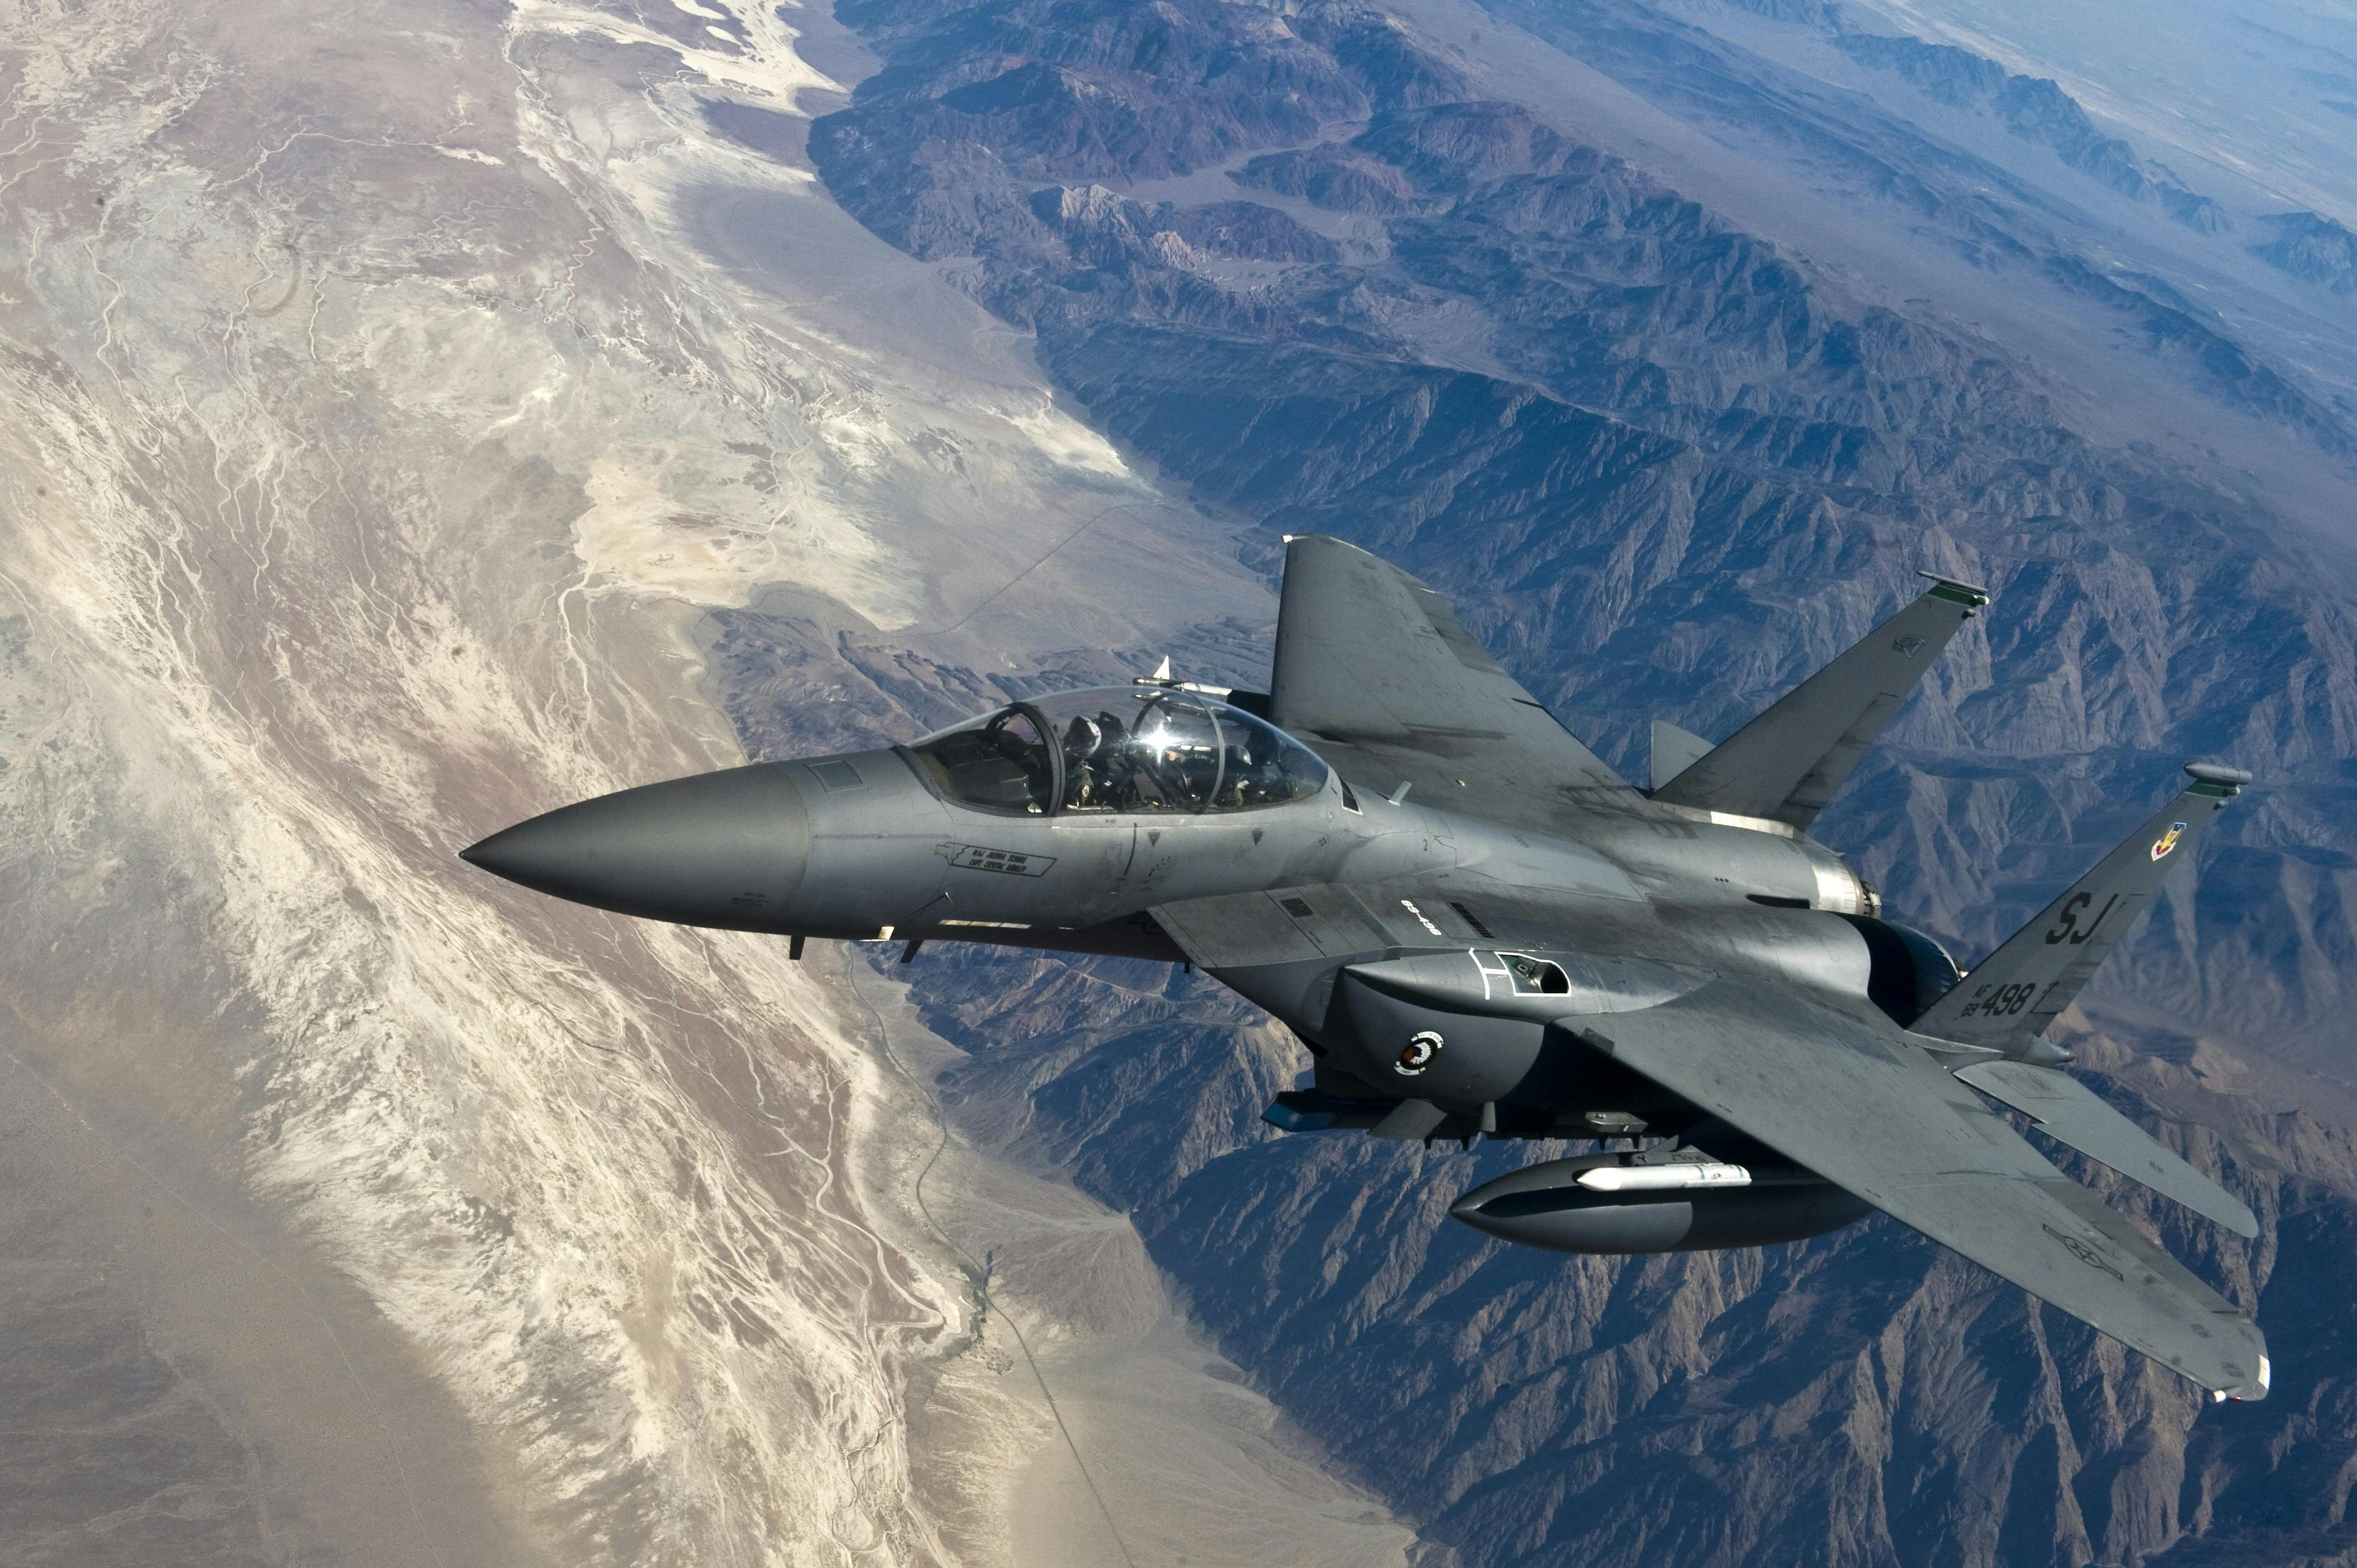 500 Fighter Jet Pictures  Download Free Images on Unsplash